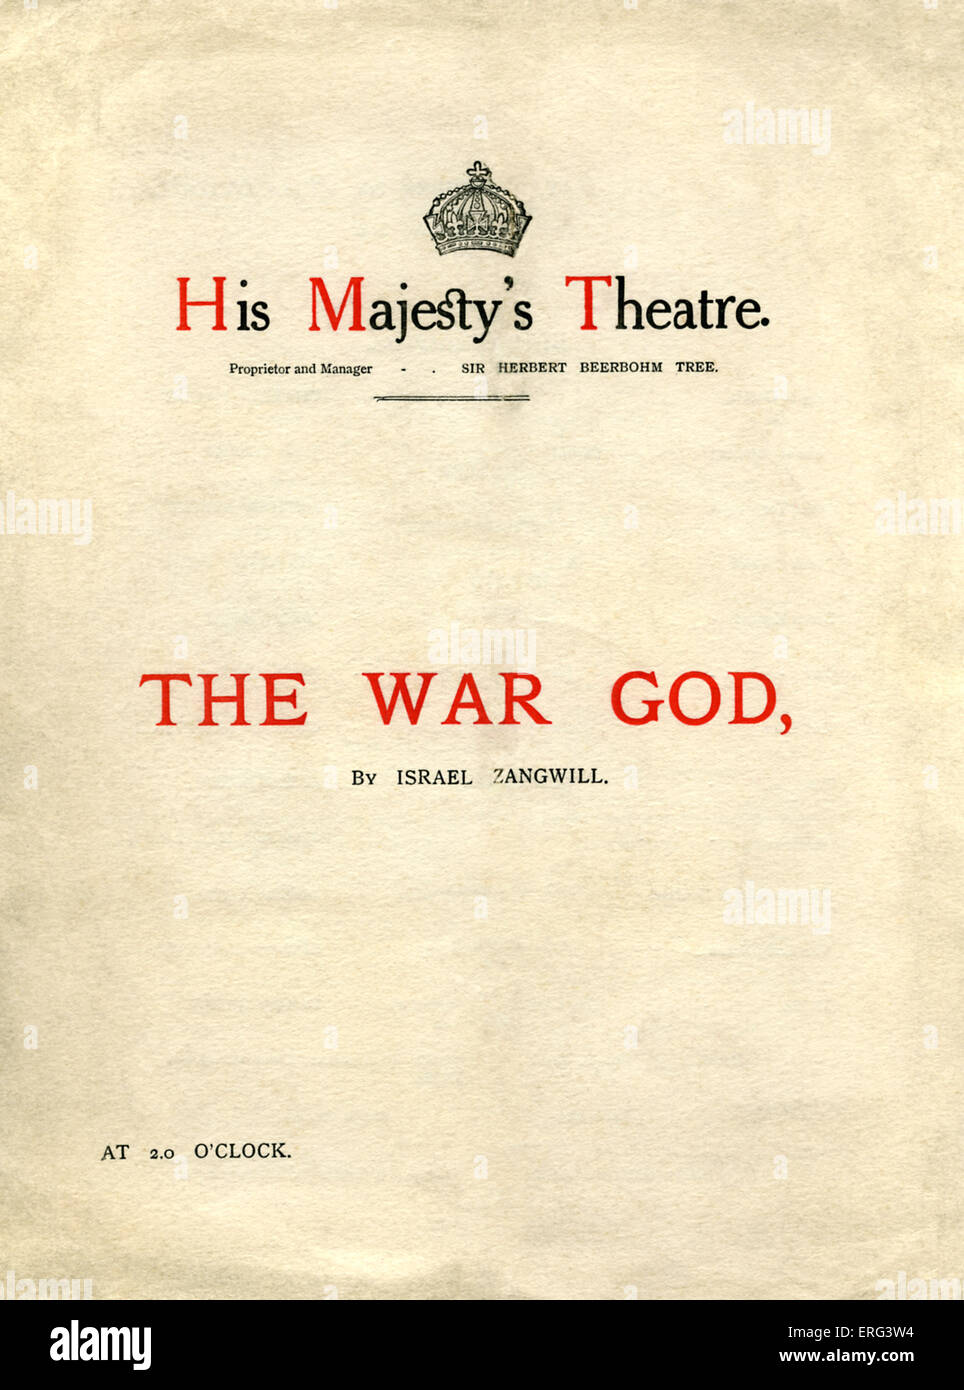 Israel Zangwill "der Kriegsgott", das Programm. Seine Majestät Theatre, London, November 1911 durchgeführt. IZ, 21. Januar 1864- Stockfoto